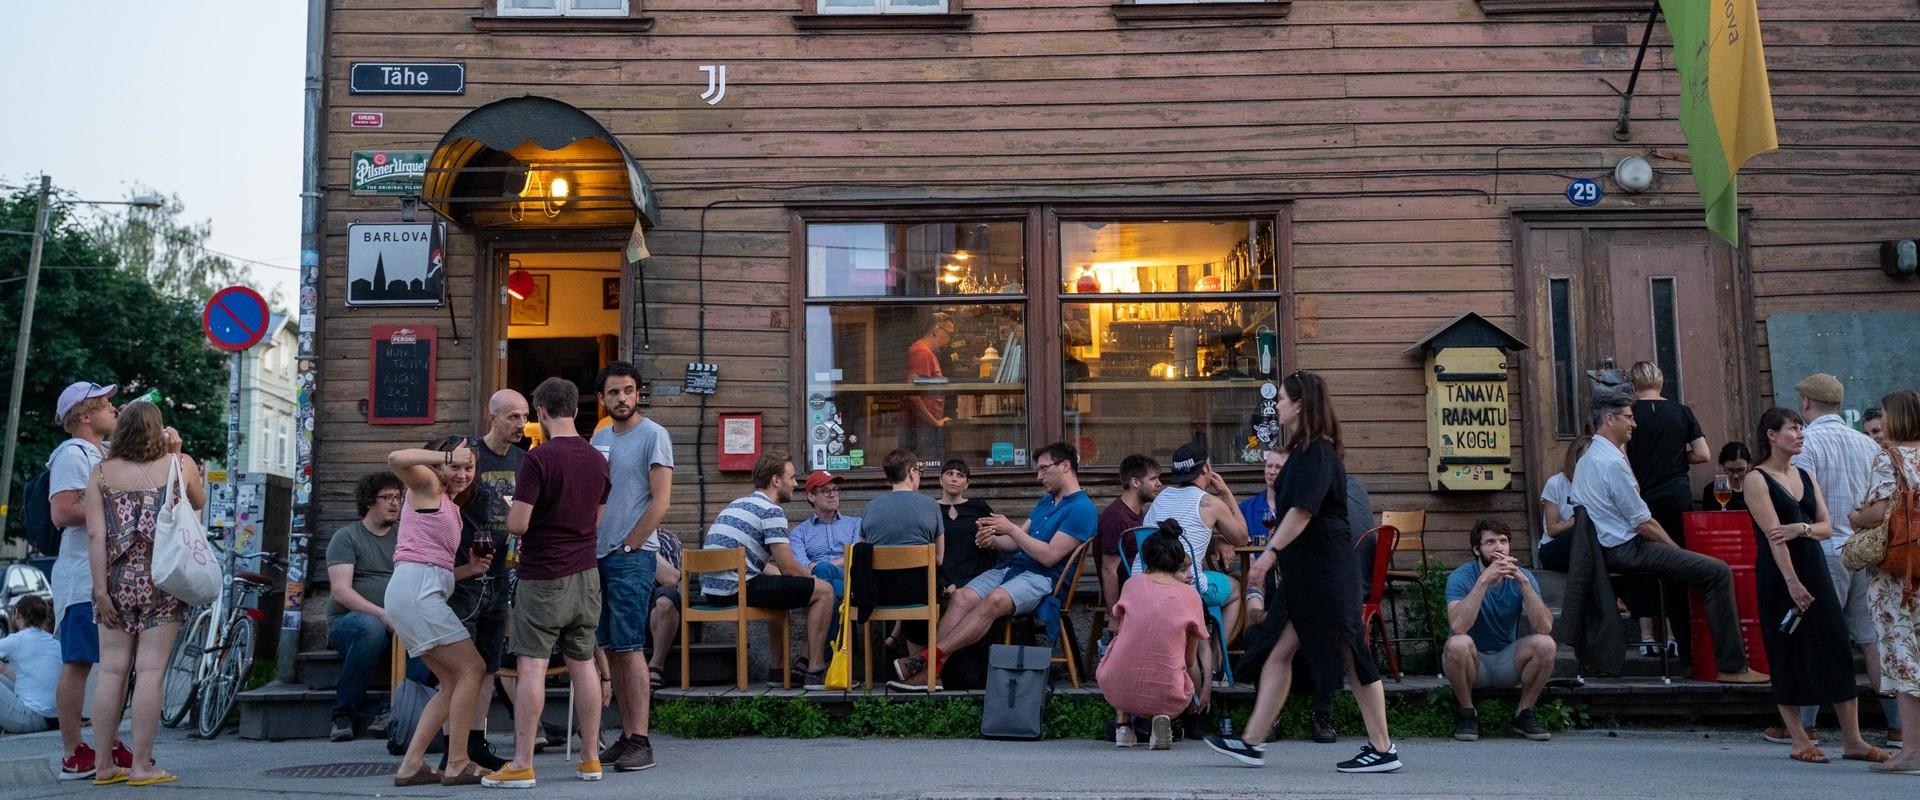 People enjoying a summer evening in front of Barlova Bar